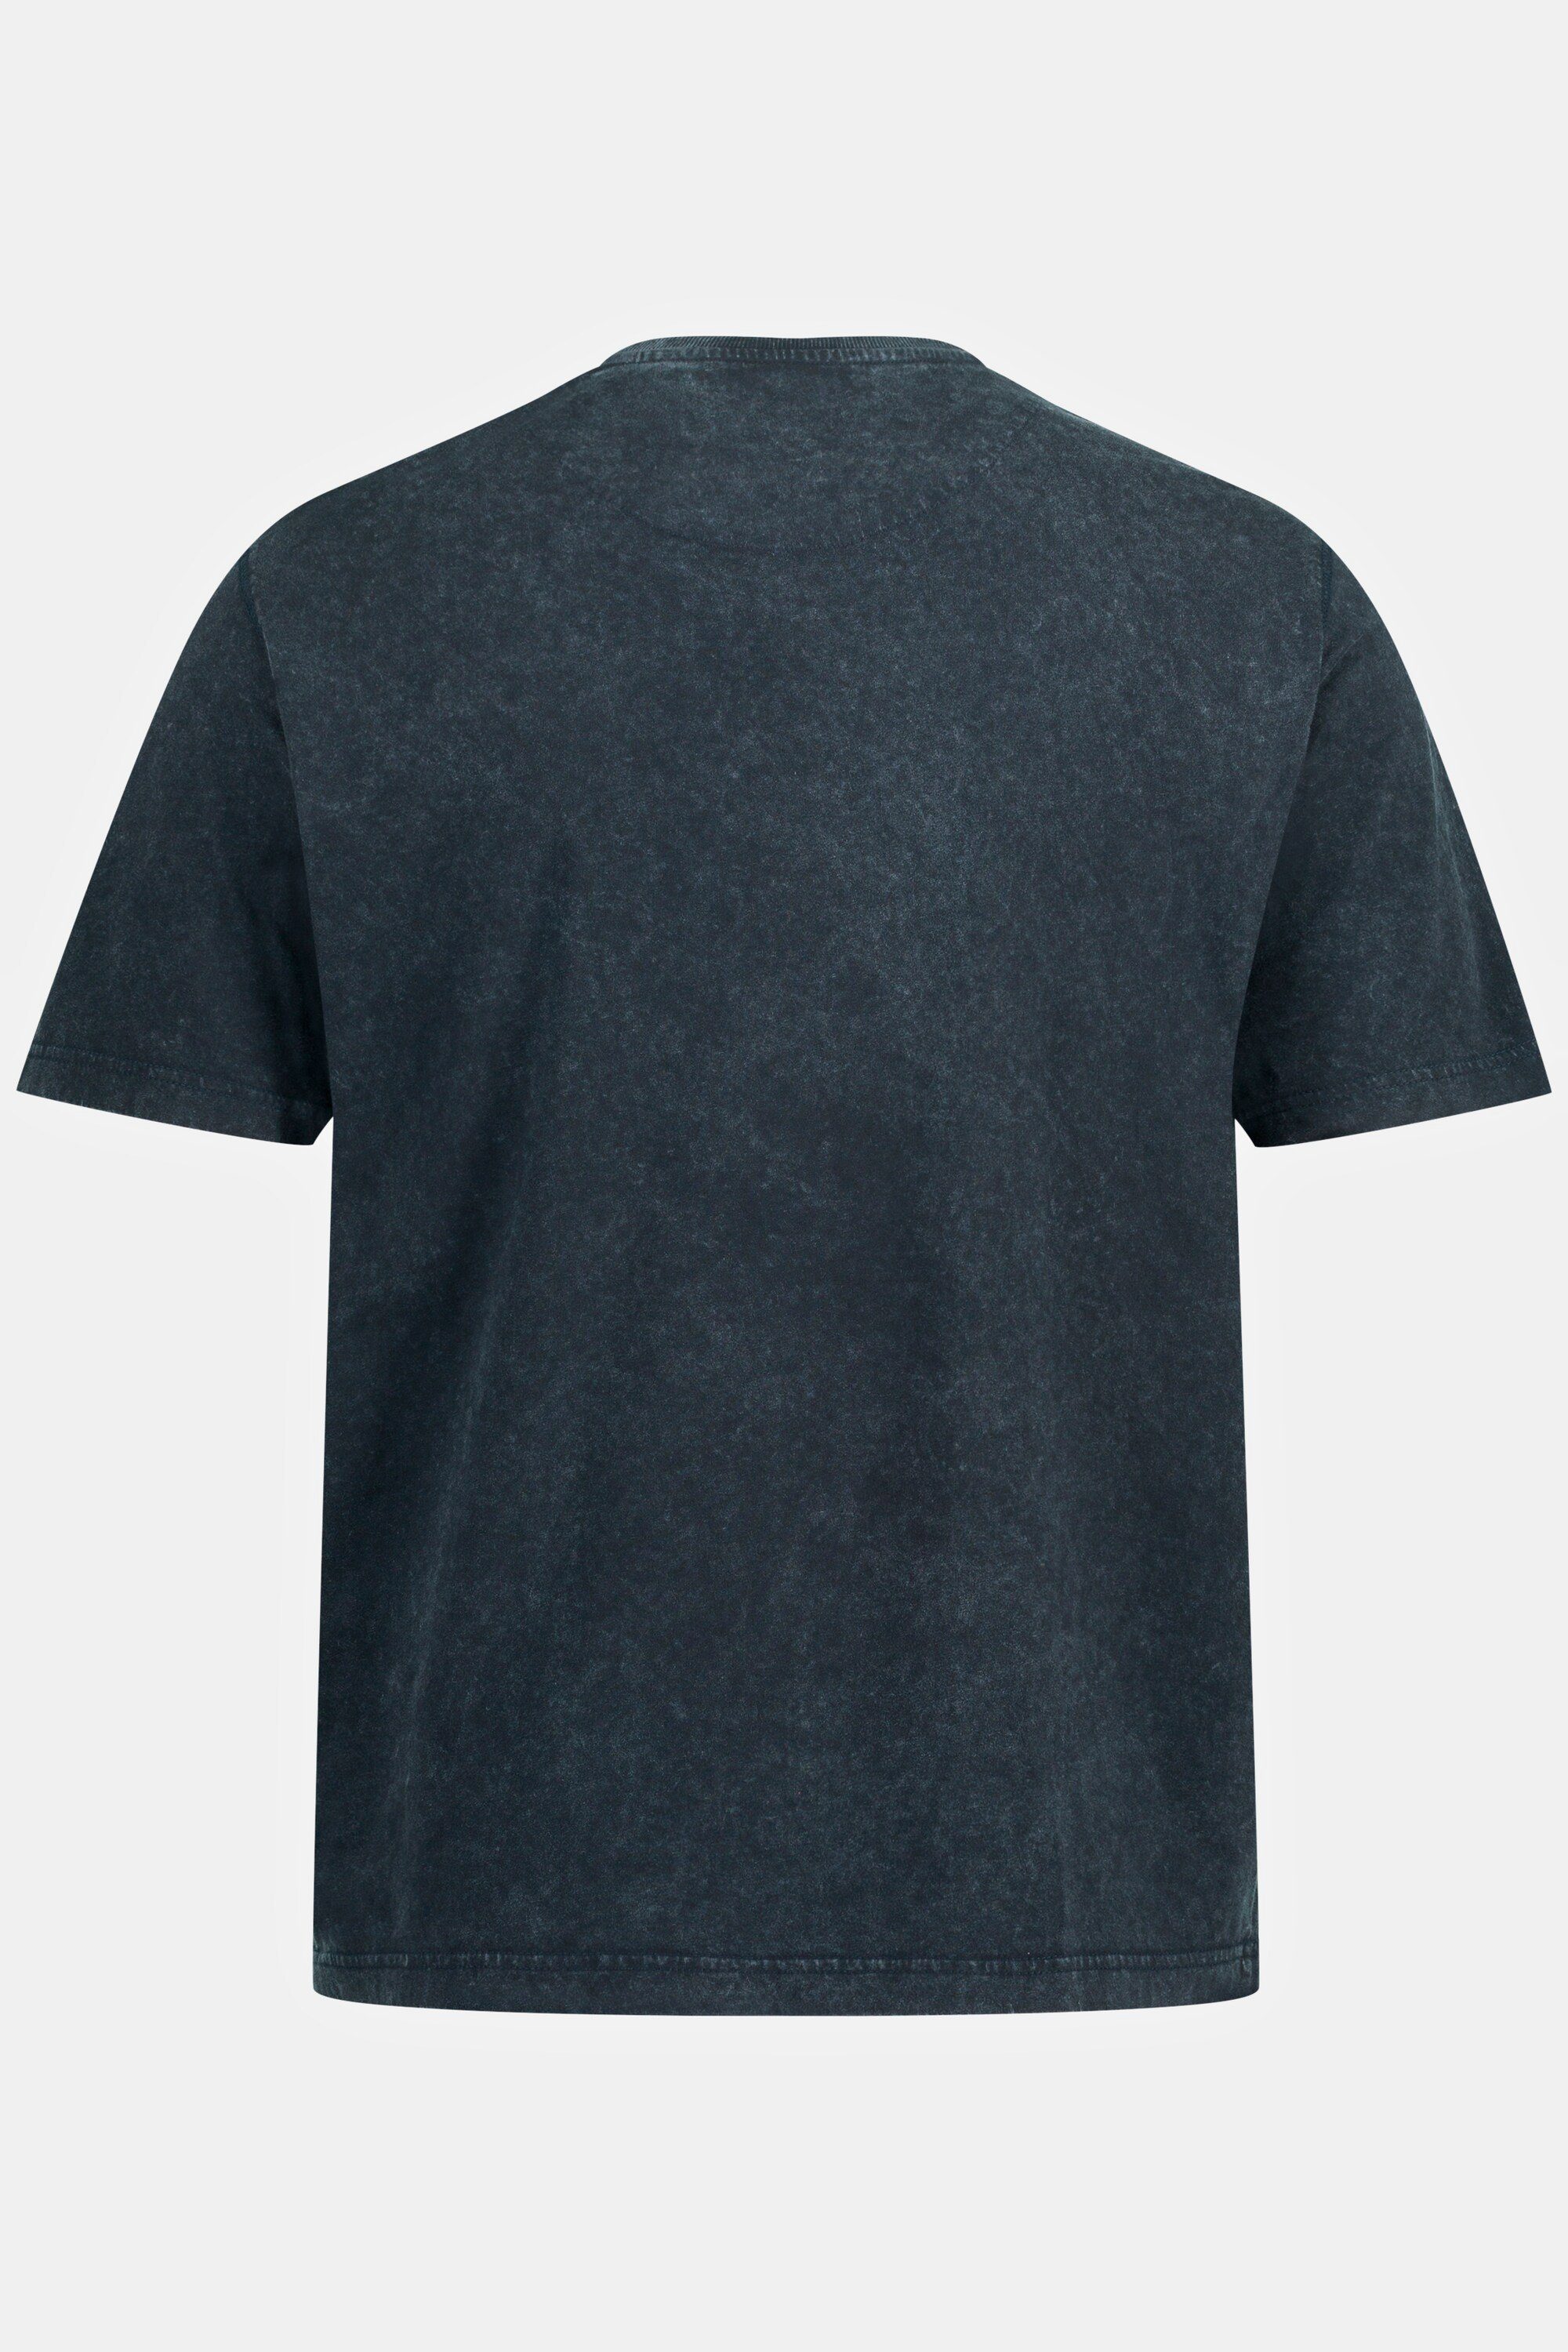 York New JP1880 Look Print Used T-Shirt Halbarm Rundhals T-Shirt